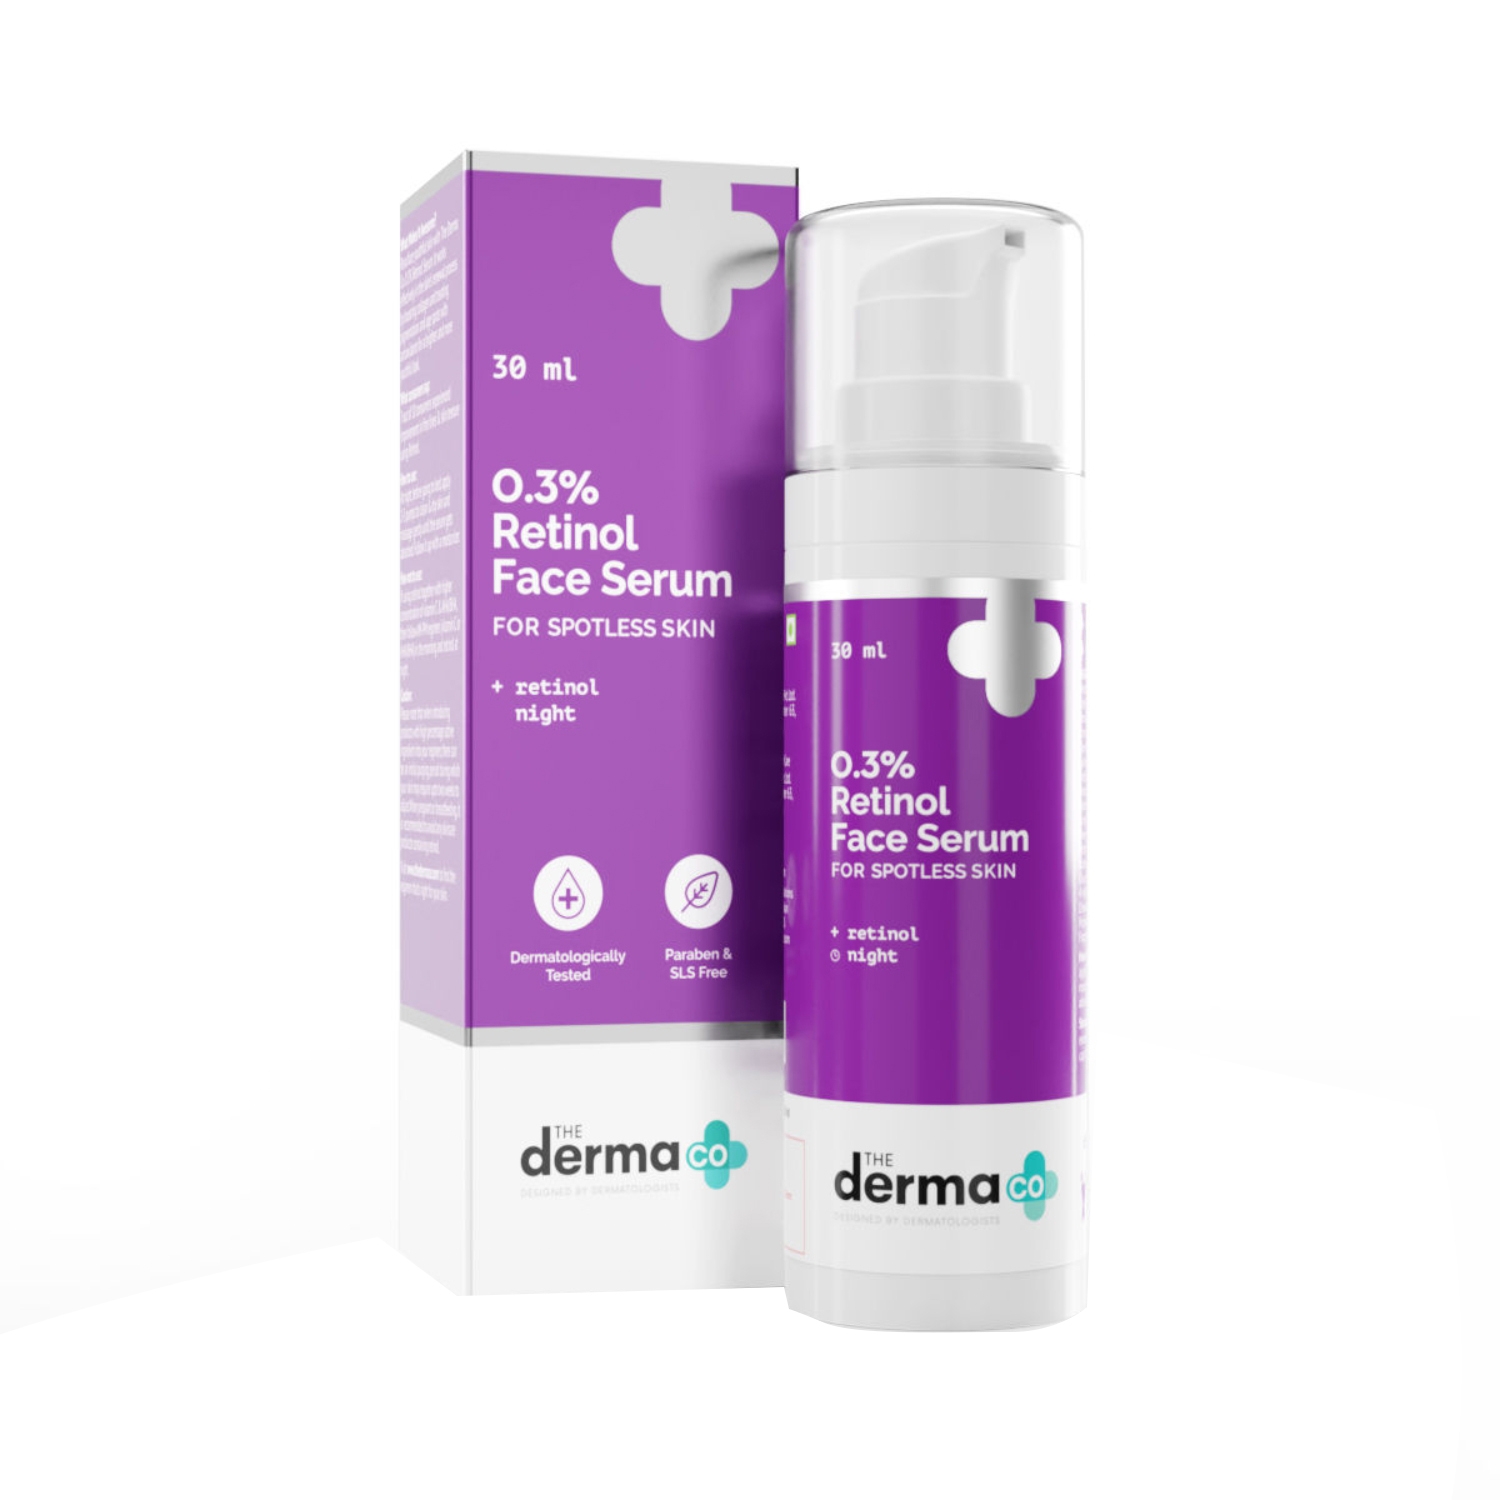 The Derma Co | The Derma Co 0.3% Retinol Face Serum (30ml)